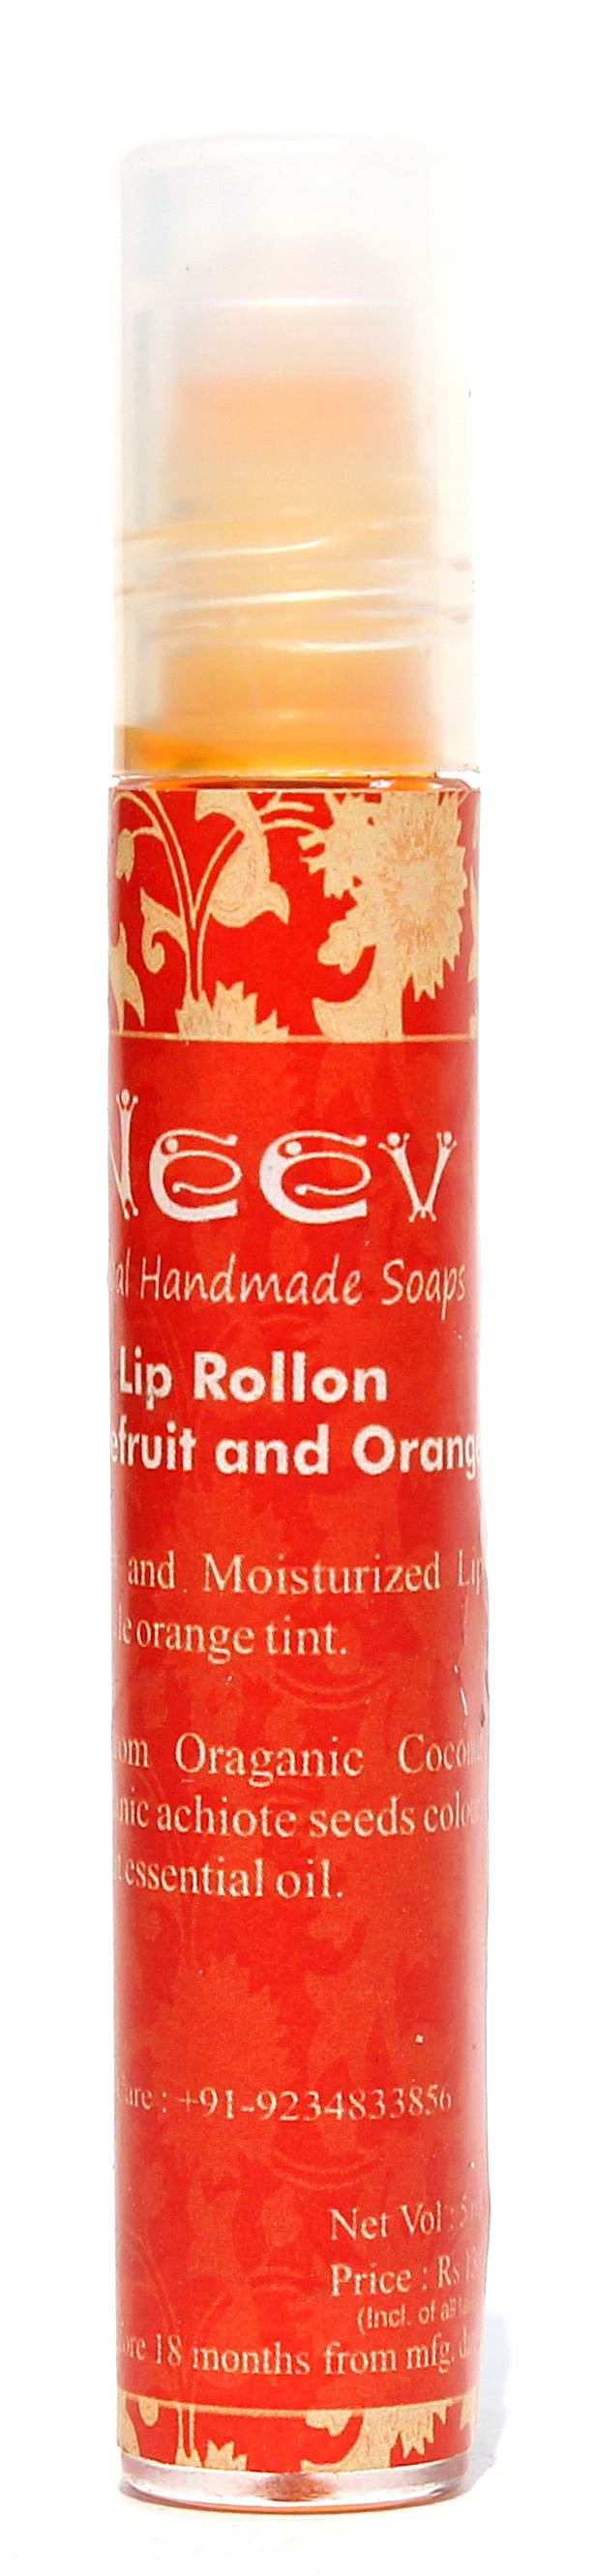 Lip Rollon Grapefruit and Orange